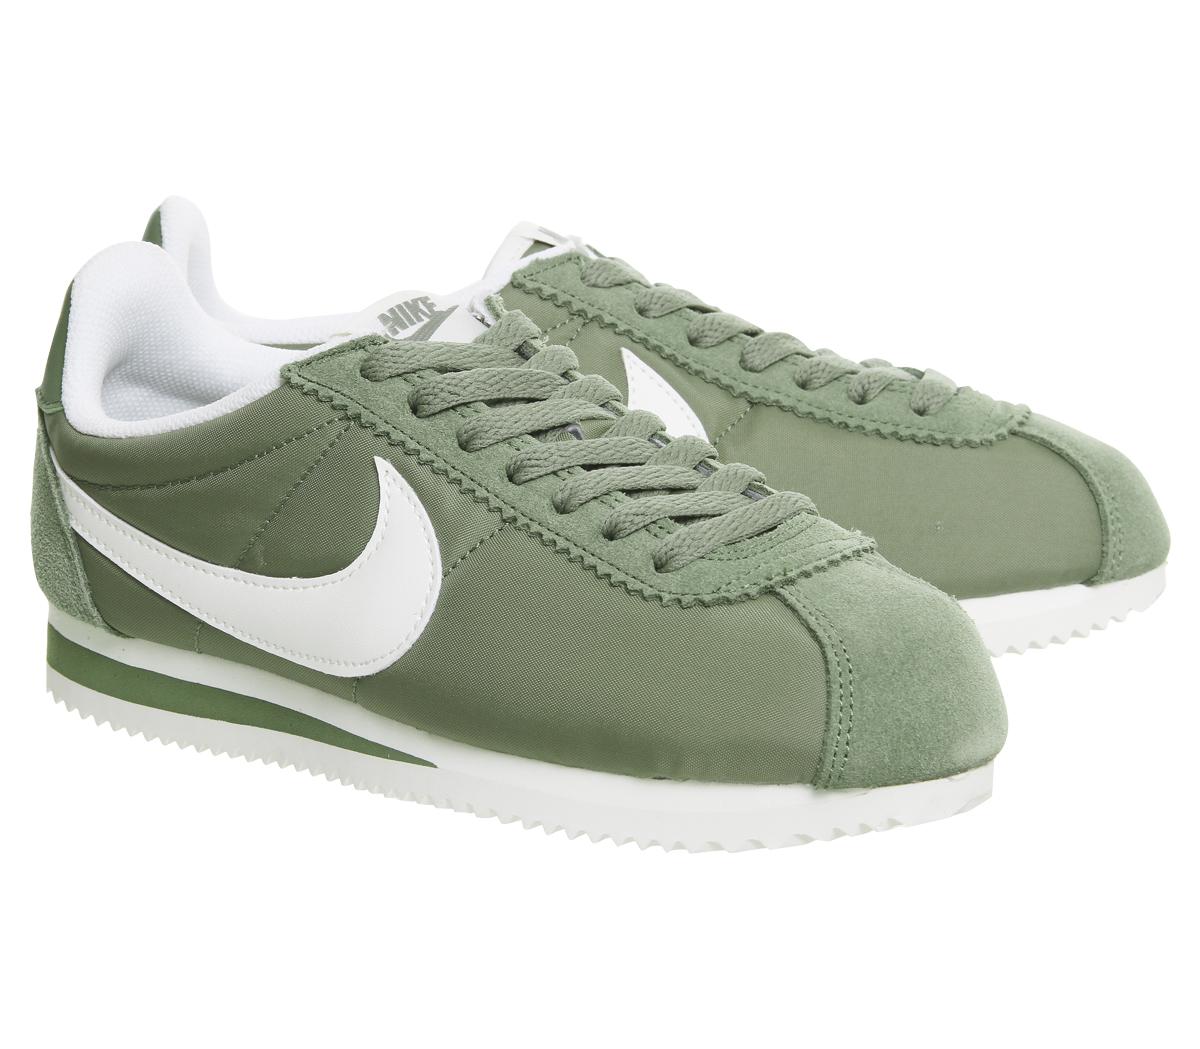 Lyst Nike  Cortez  Nylon Trainers in Green 